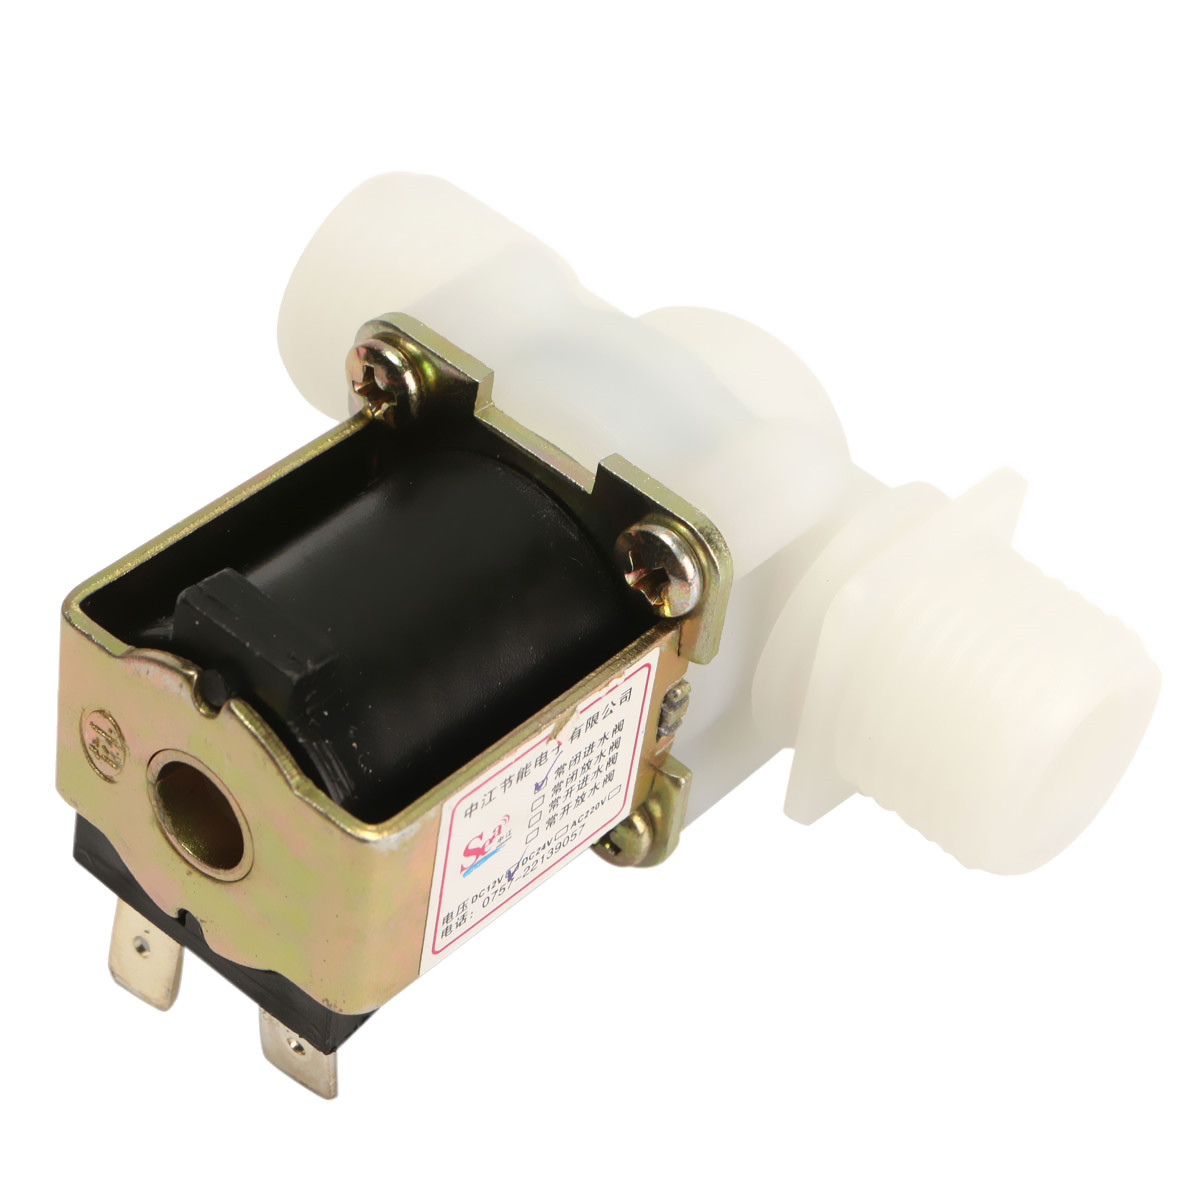 12quot-Water-Flow-Control-LCD-Meter-With-Flow-Sensor-and-Solenoid-val-1056829